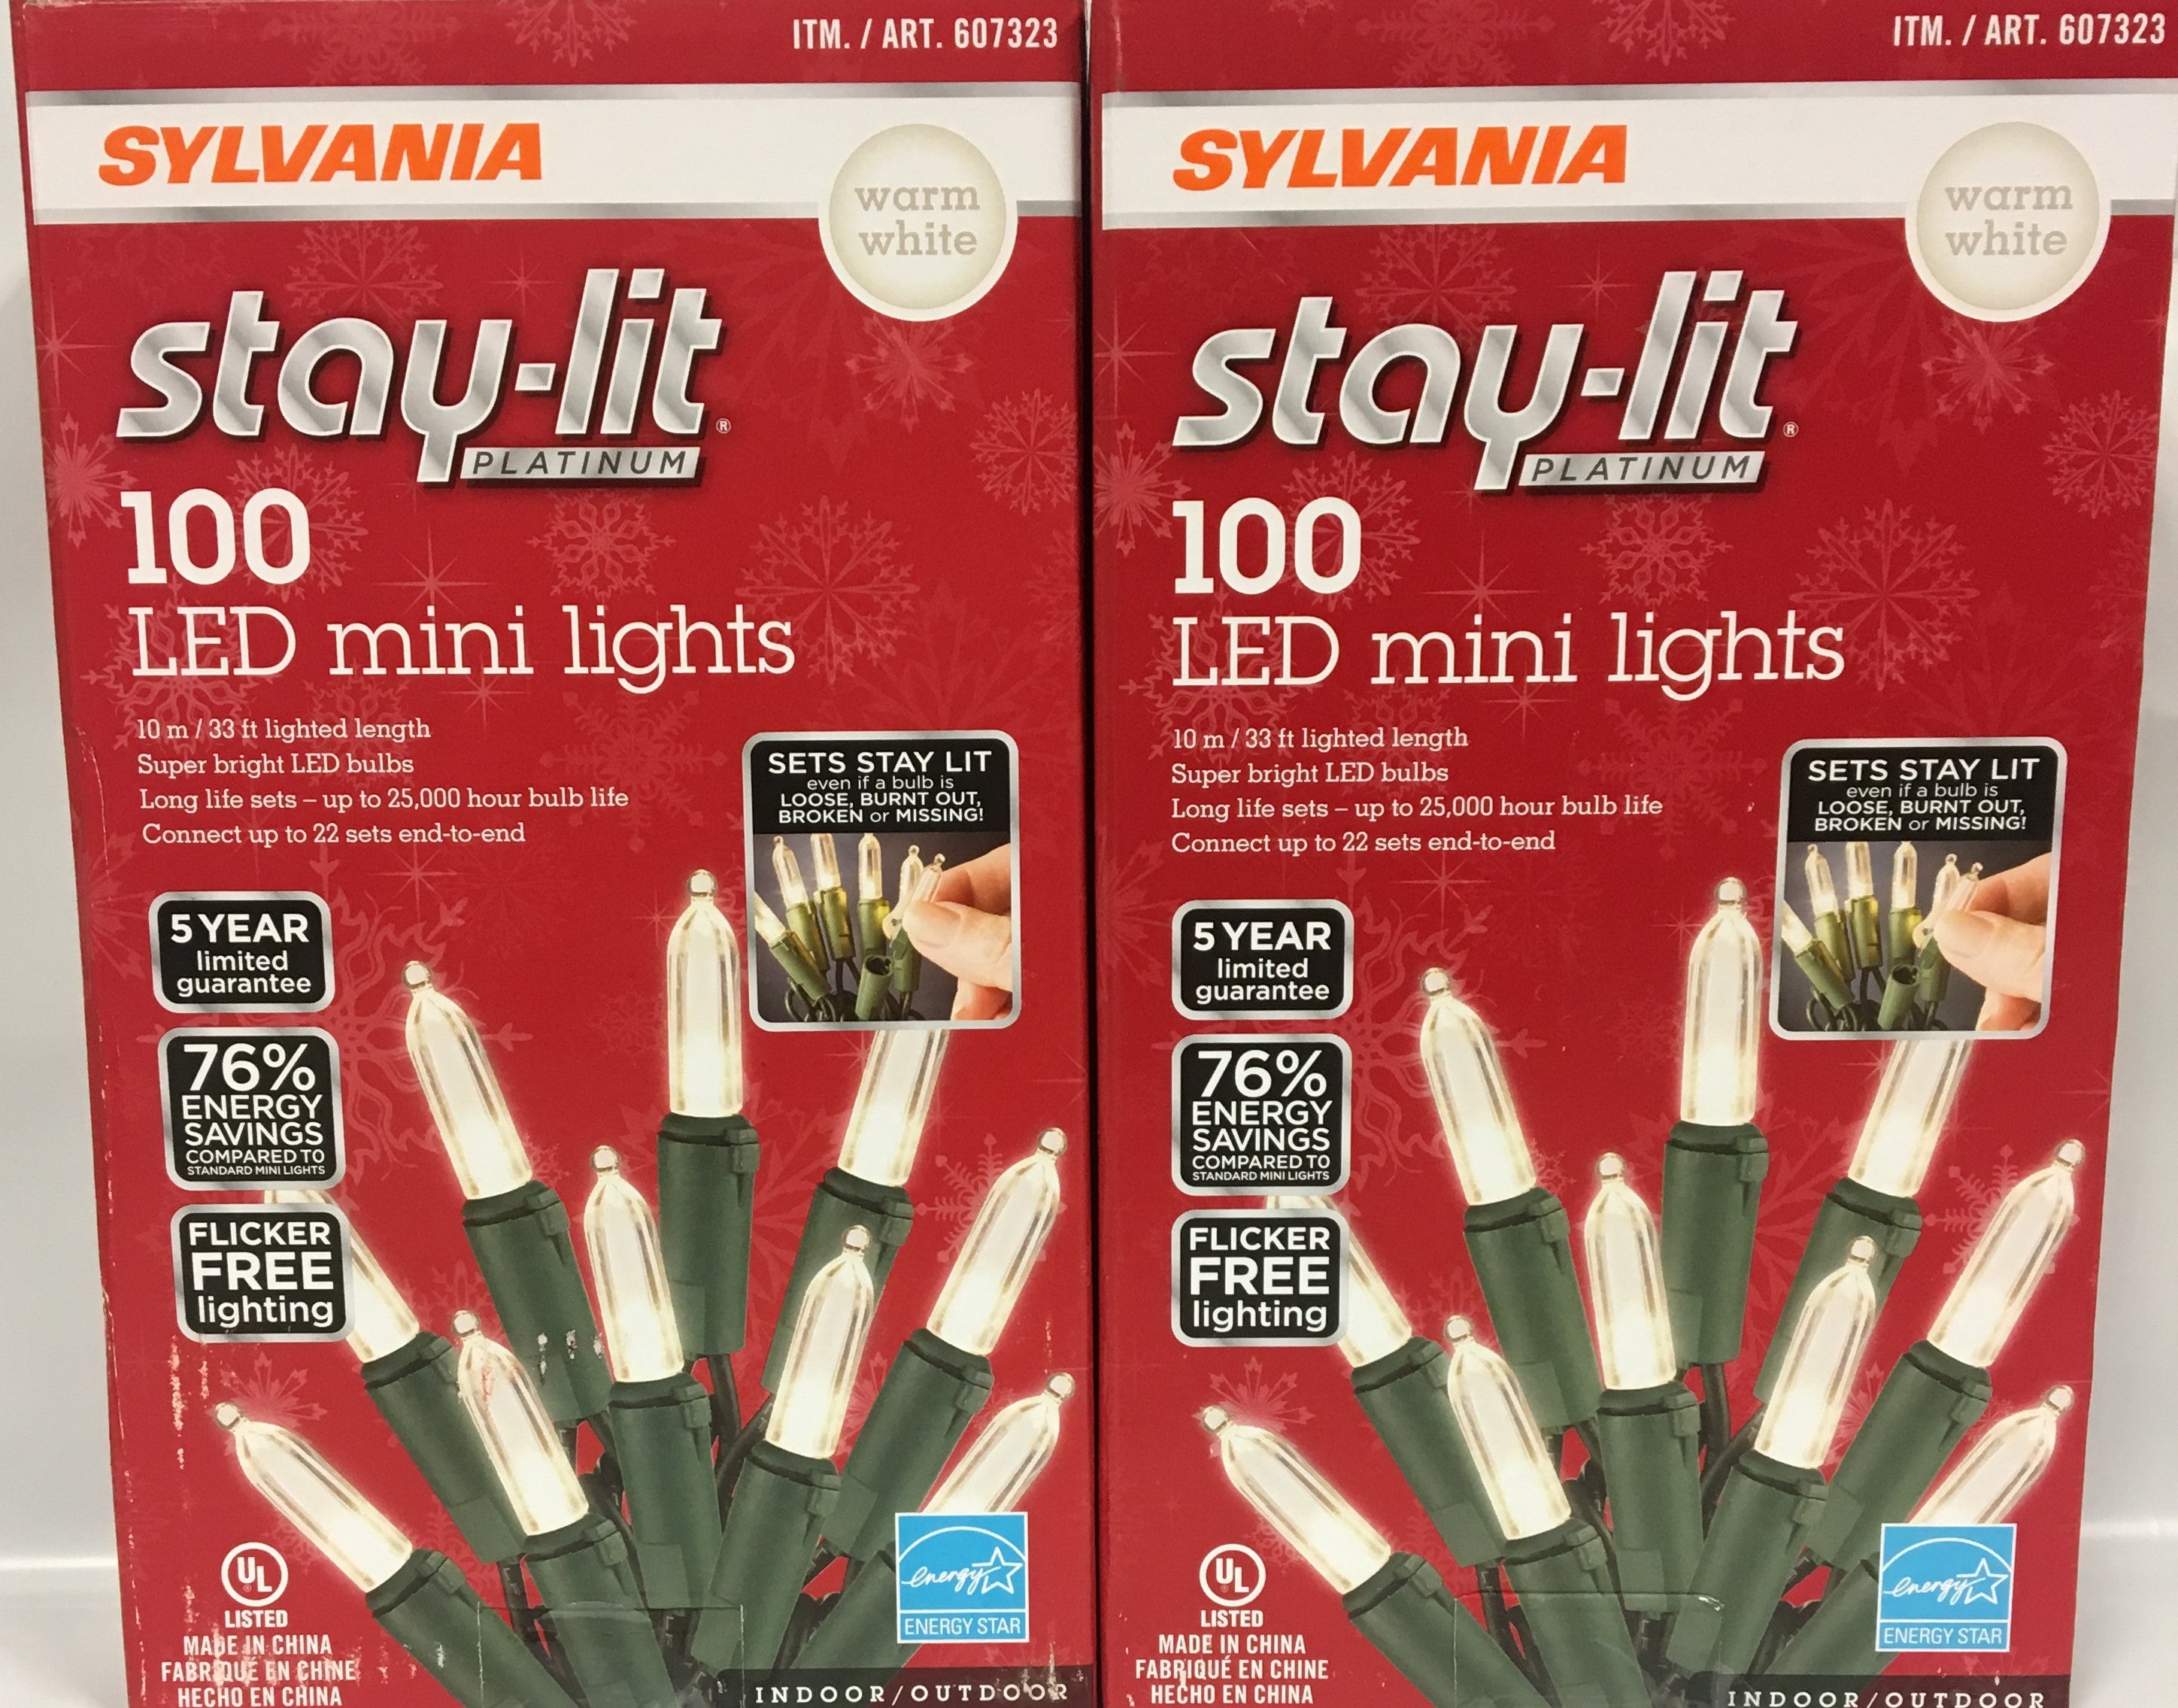 Sylvania Stay-Lit Platinum LED Indoor/Outdoor Christmas String Lights Warm White, 200 ct mini lights